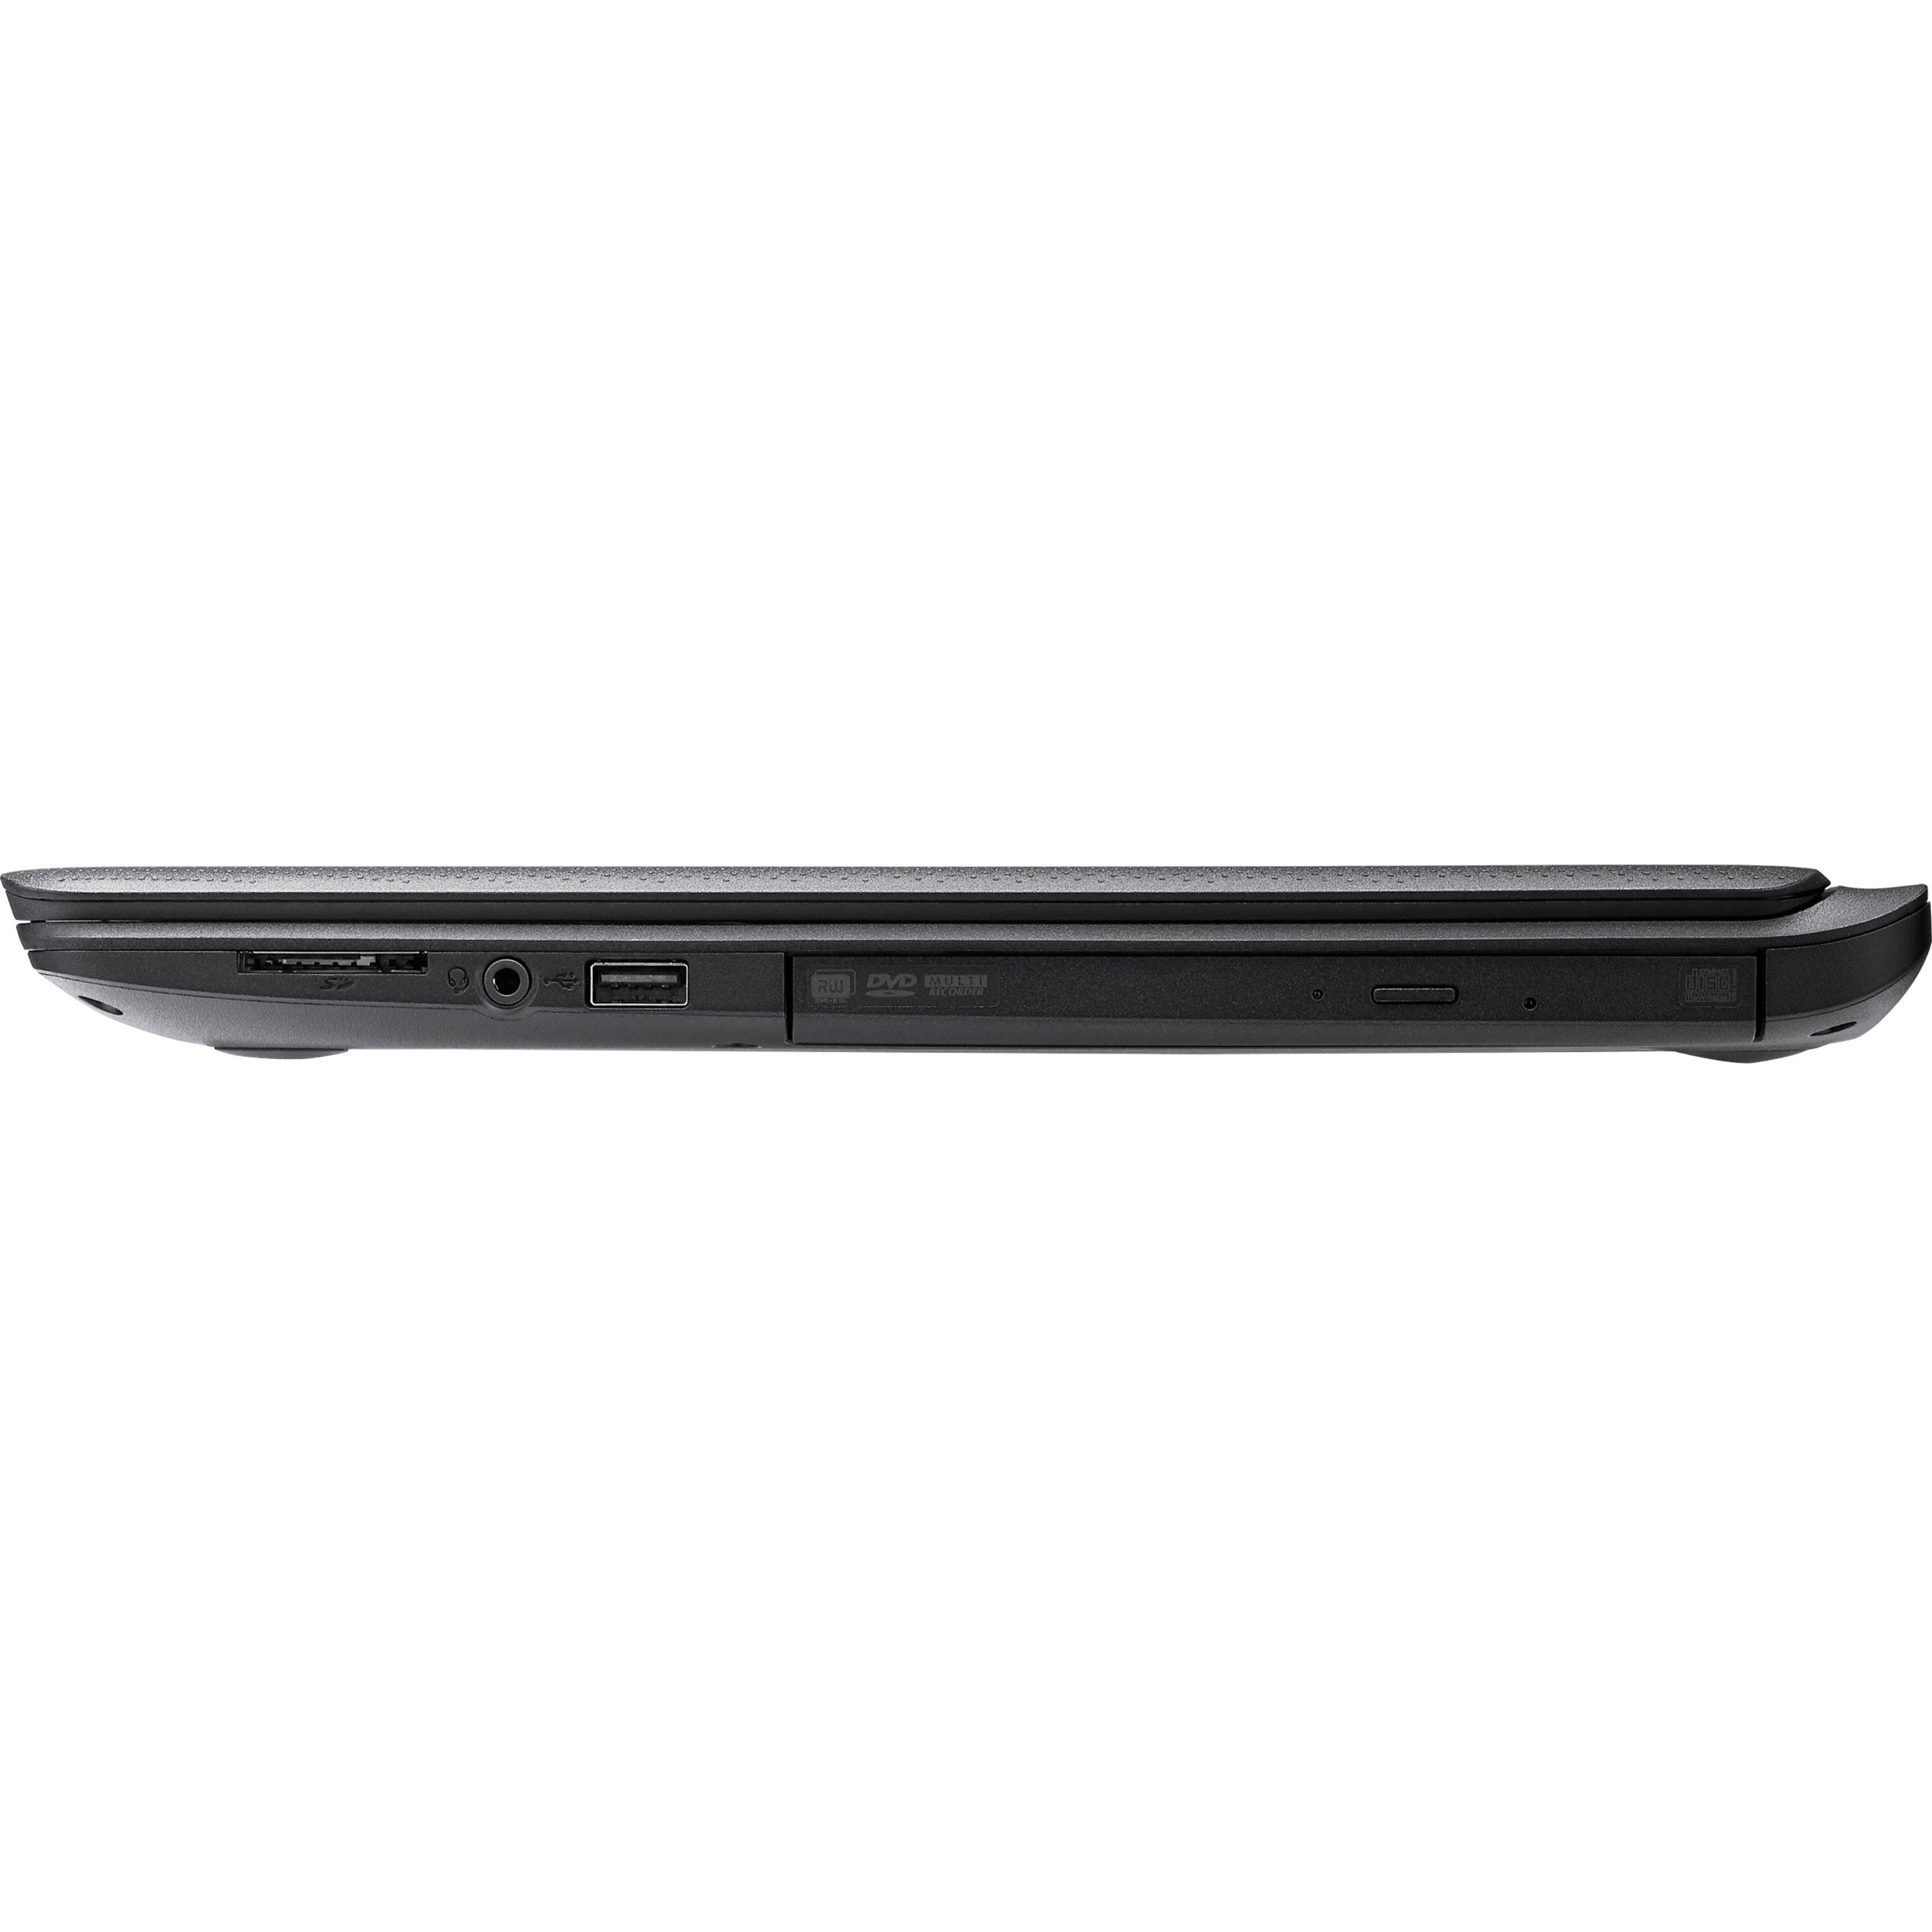 Acer Aspire 15.6" Laptop, Intel Core i3 i3-6100U, 1TB HD, DVD Writer, Windows 10 Home, ES1-572-31XL - image 2 of 5